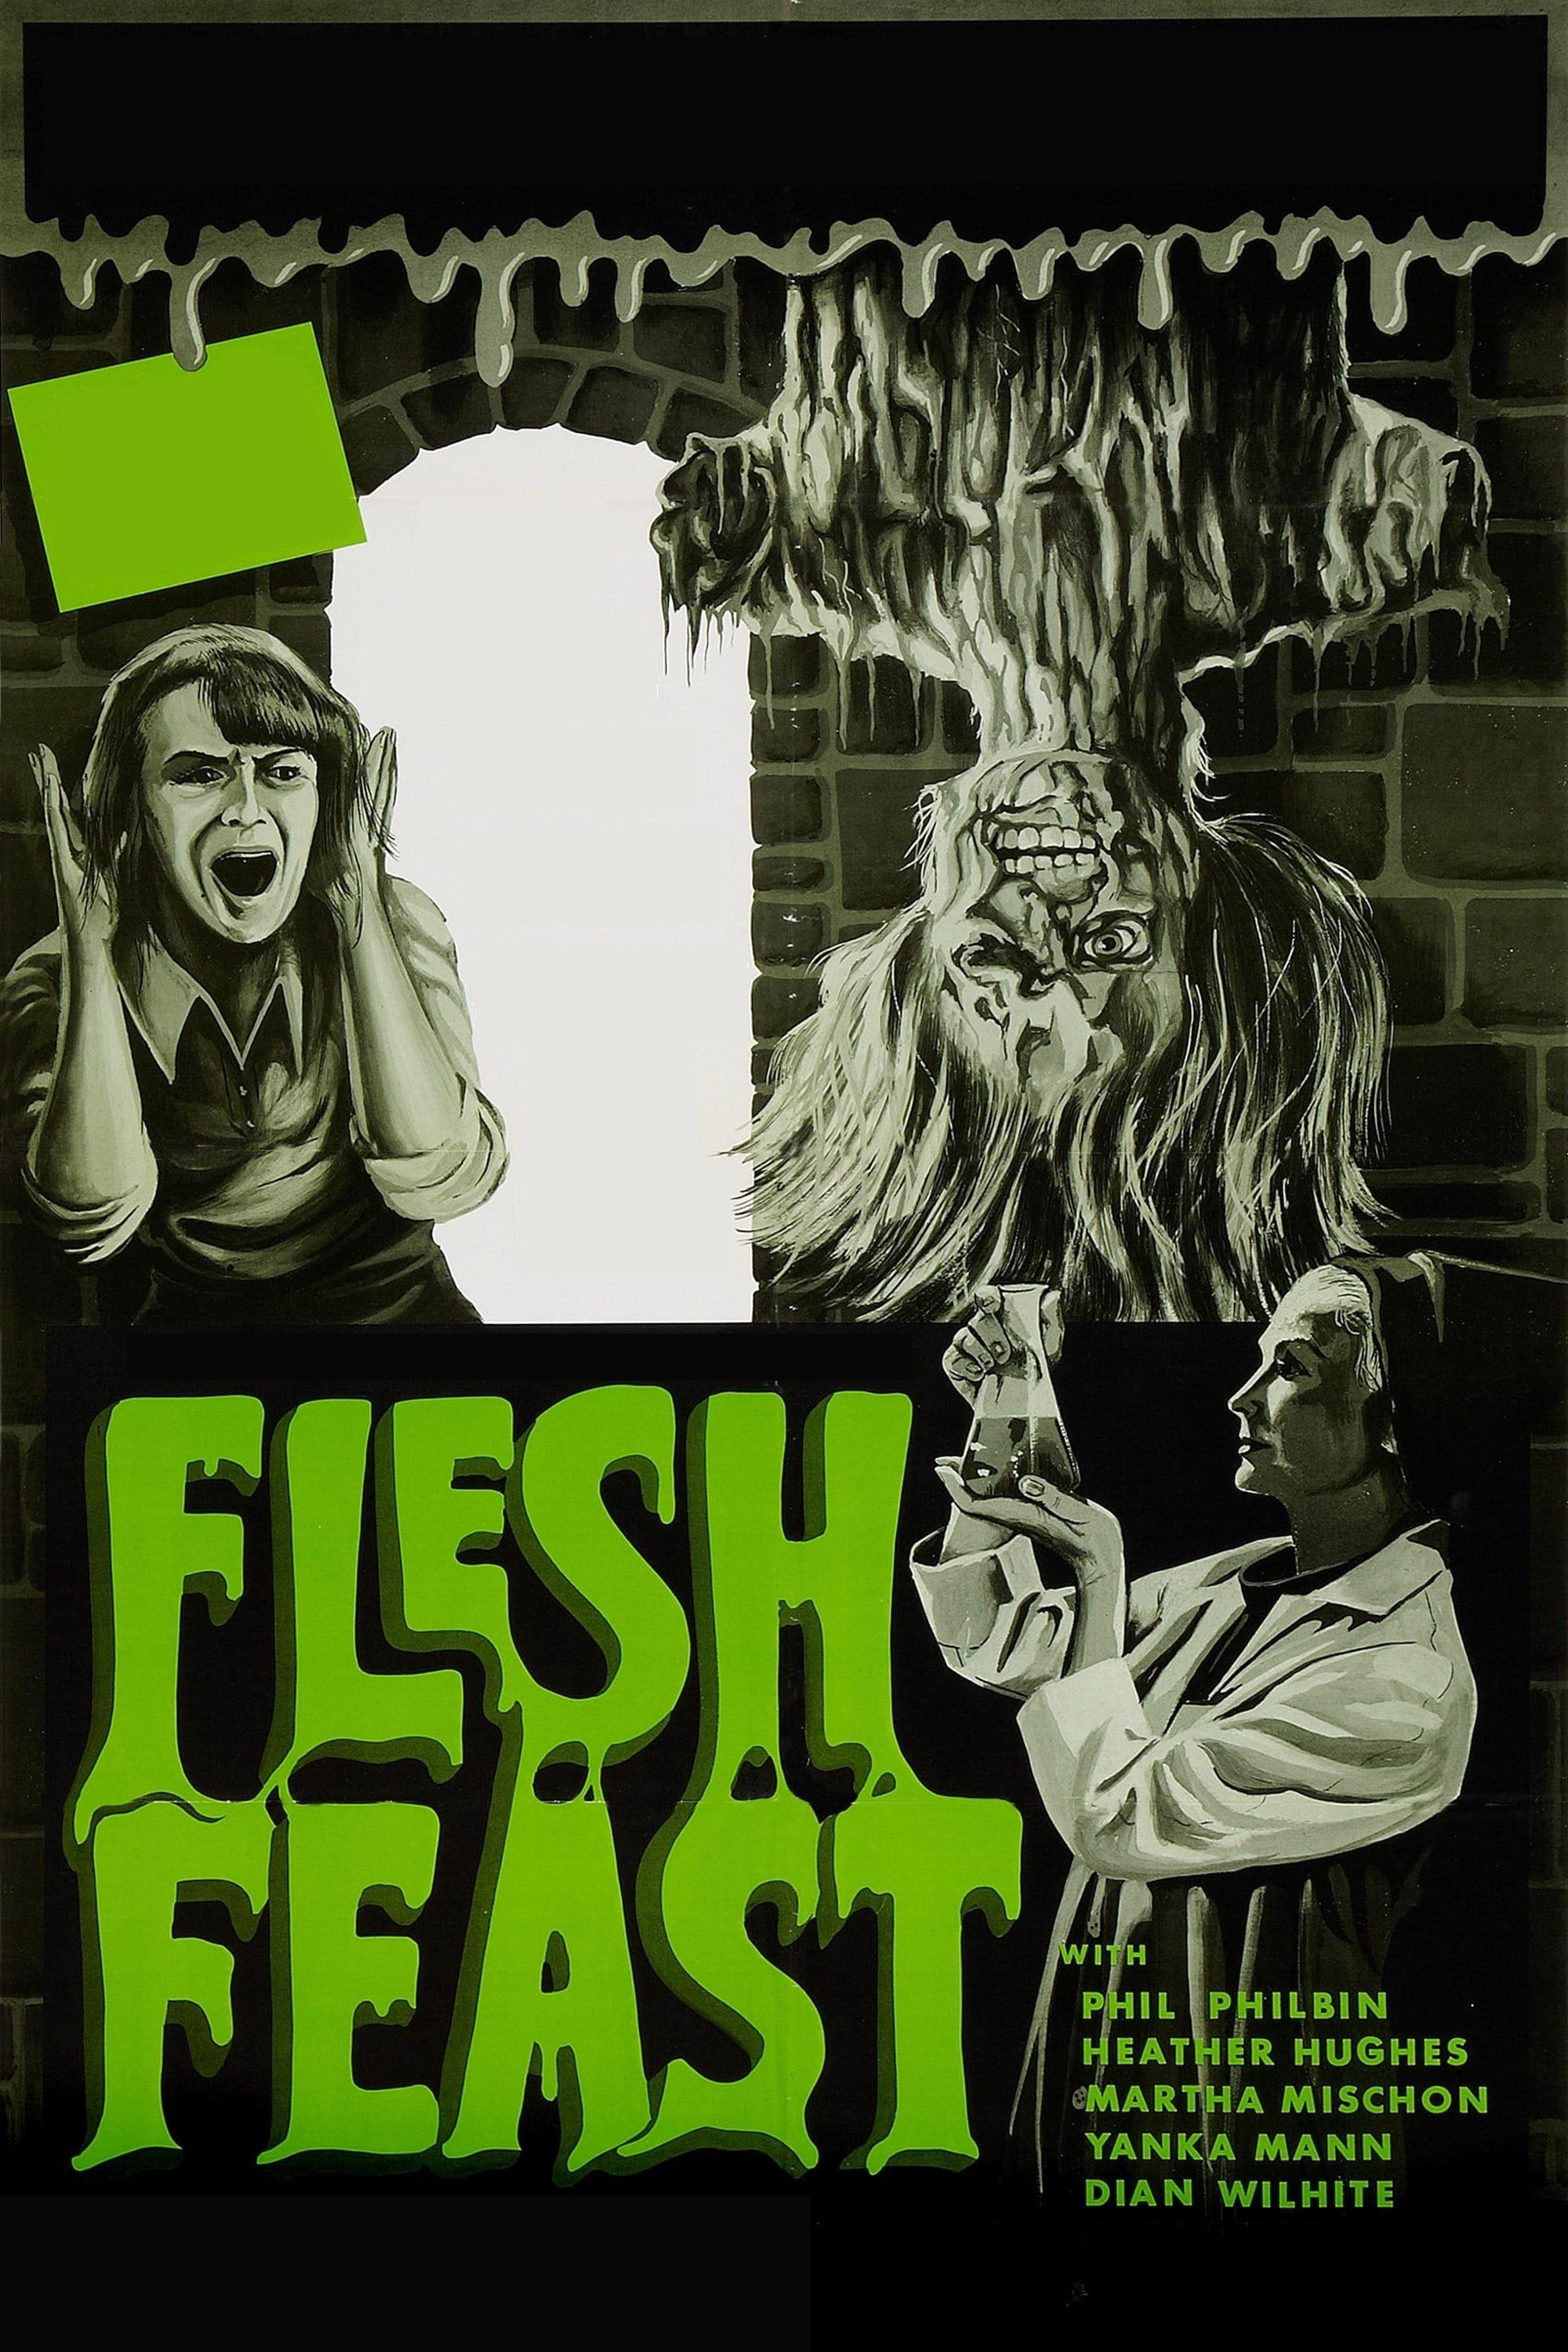 Flesh Feast poster